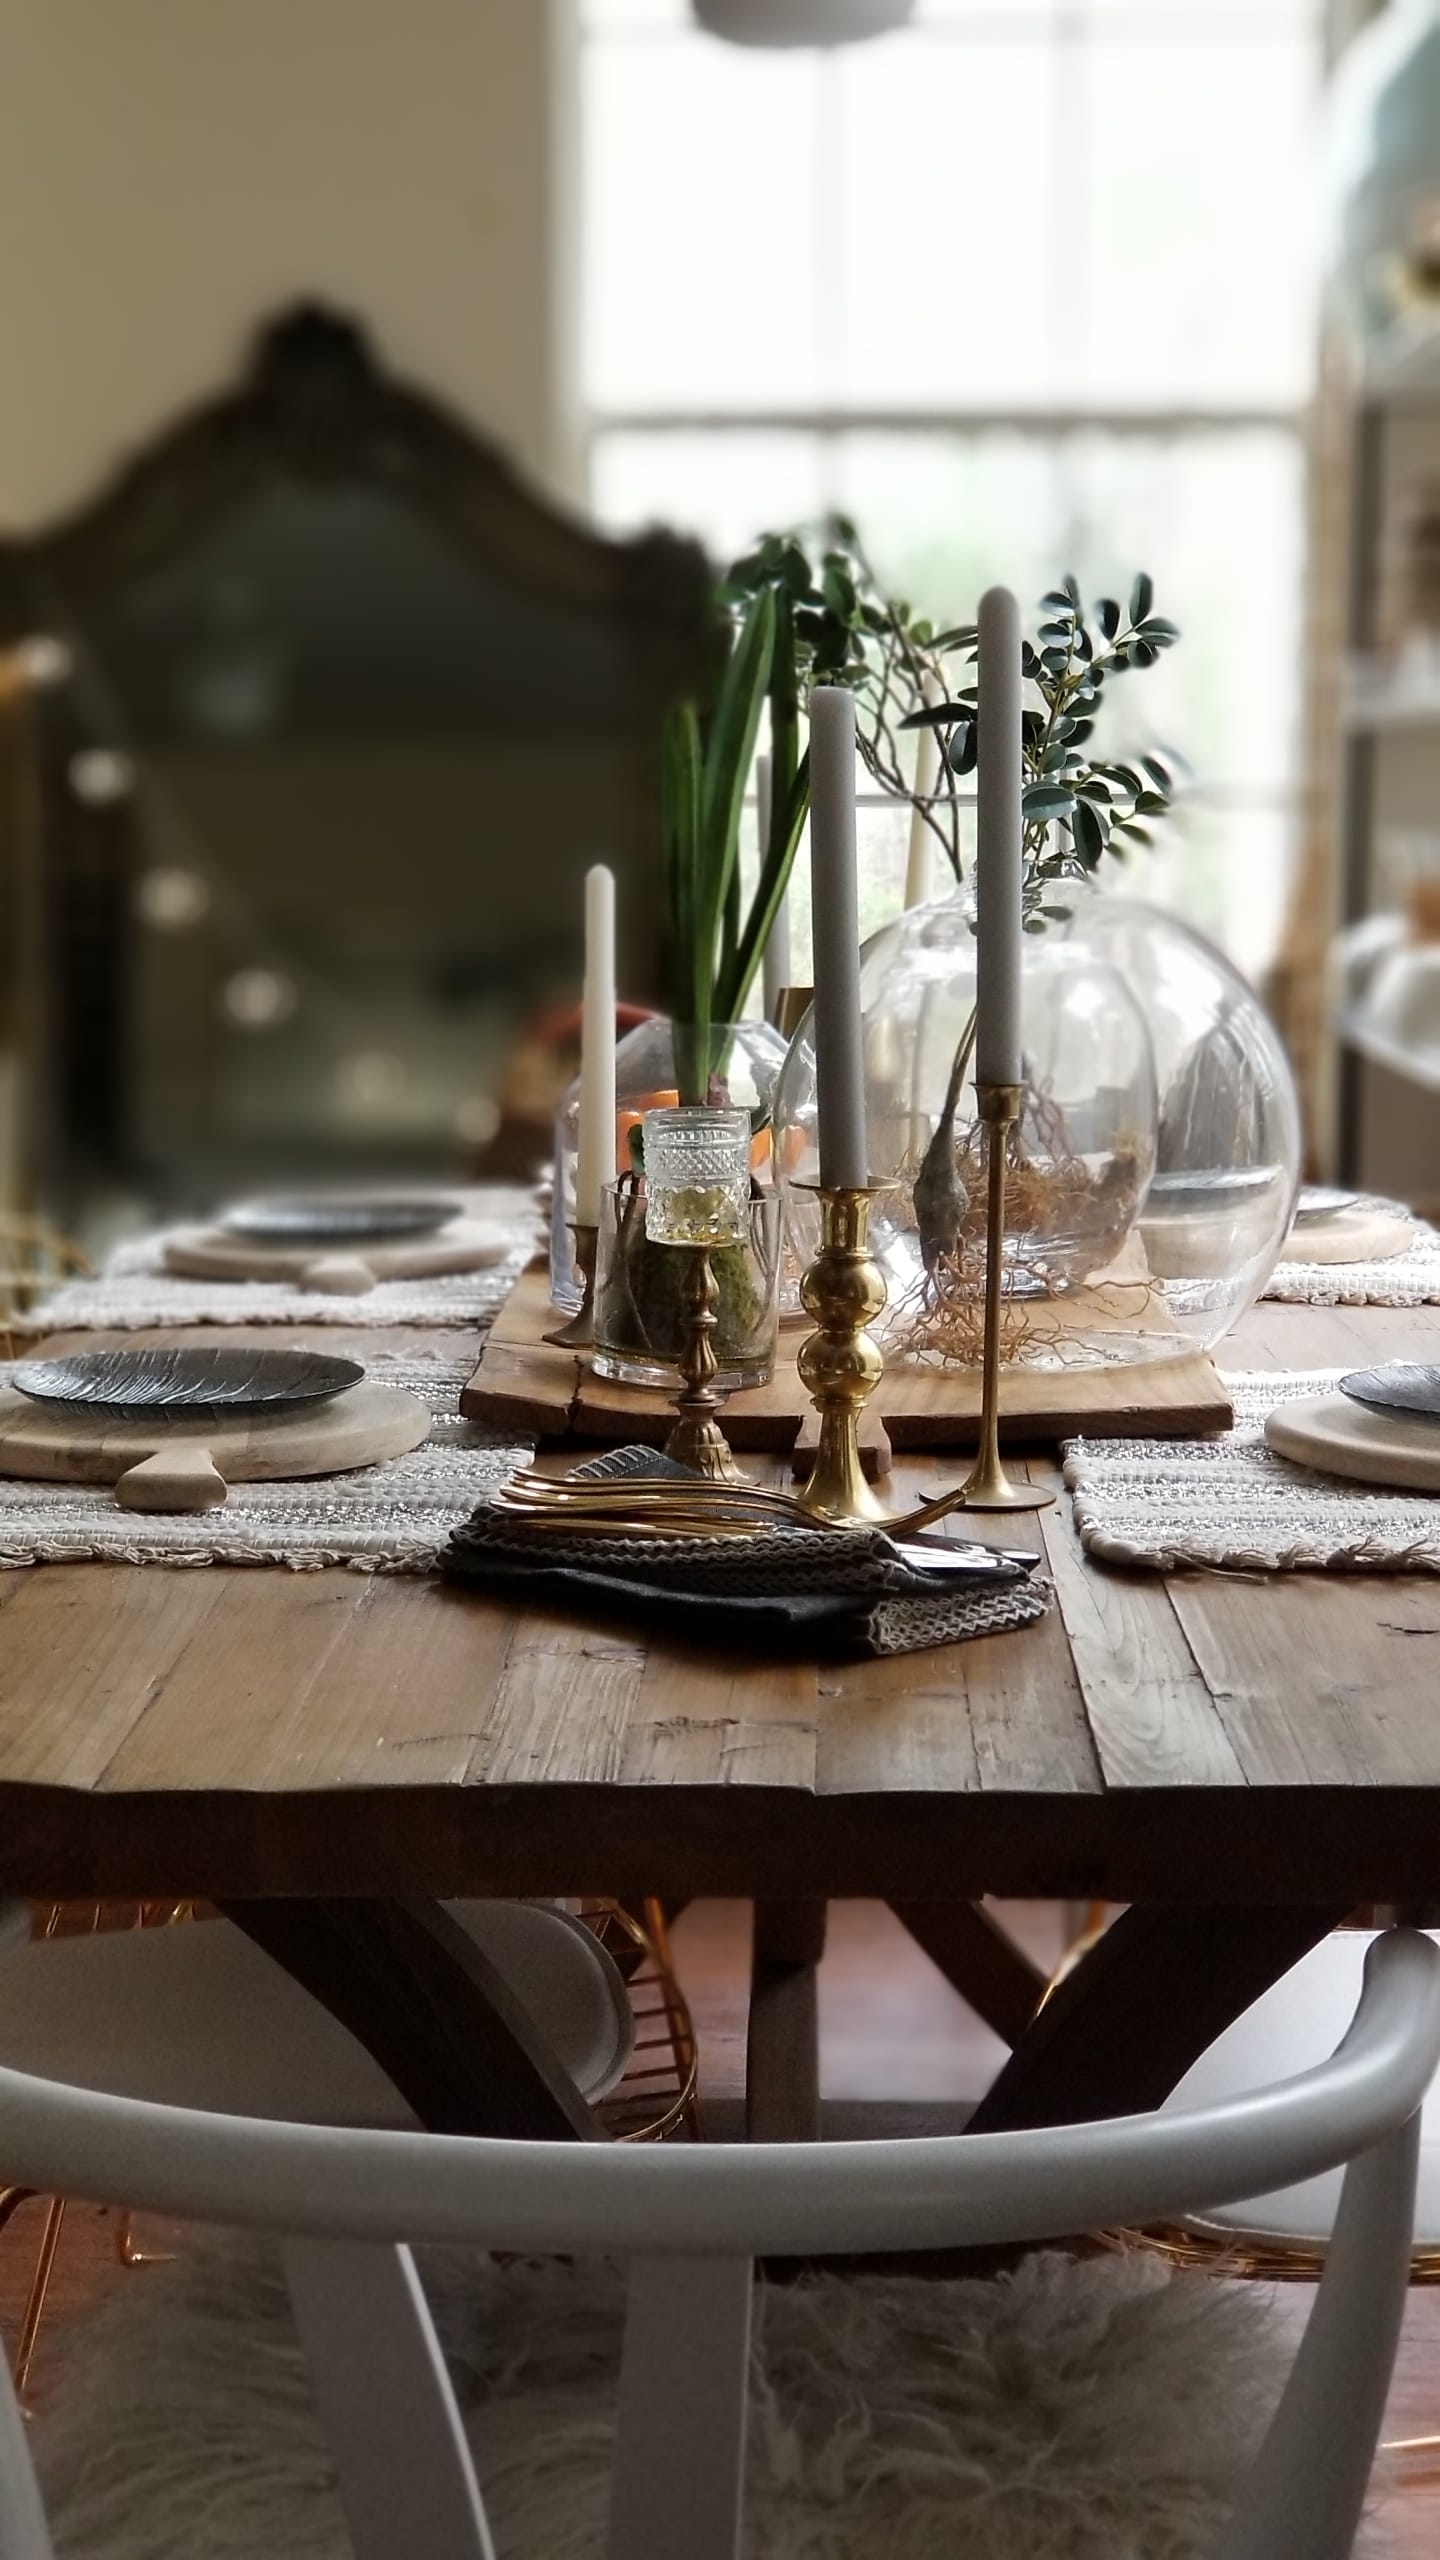 Hot New Decor Design Style 2019 Farmhouse Table Wood Glass Mixed Metals Candles Plants Scandinavian Boho Urban Chic Modern 